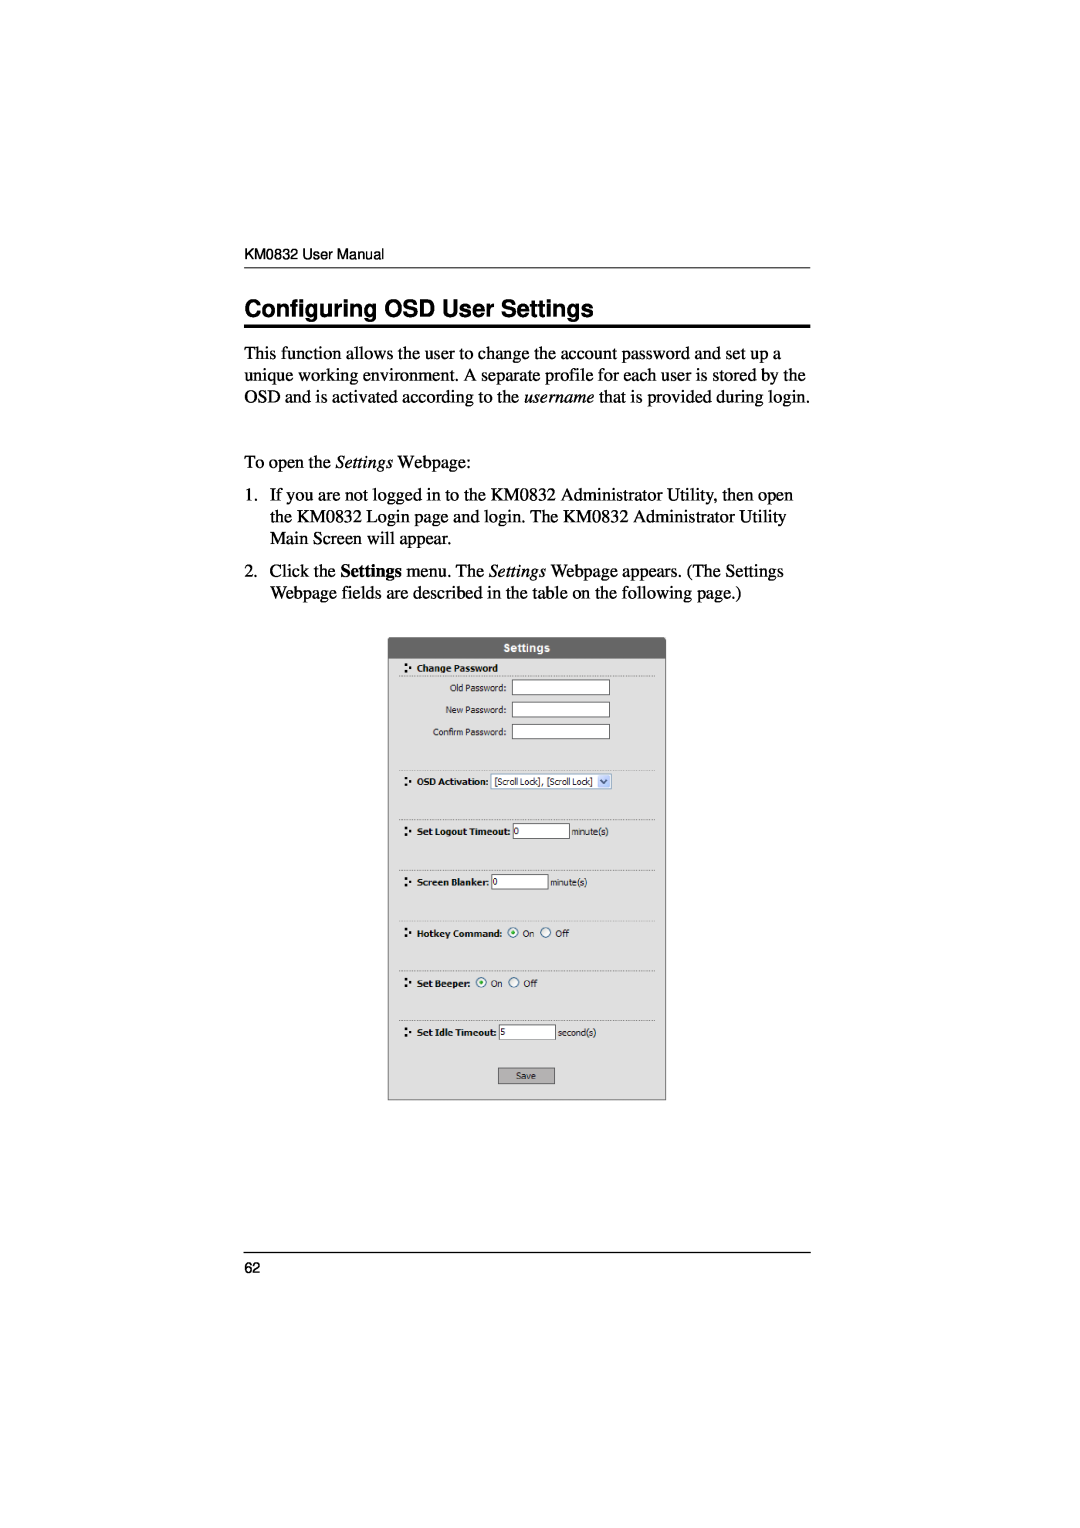 ATEN Technology KM0832 user manual Configuring OSD User Settings 